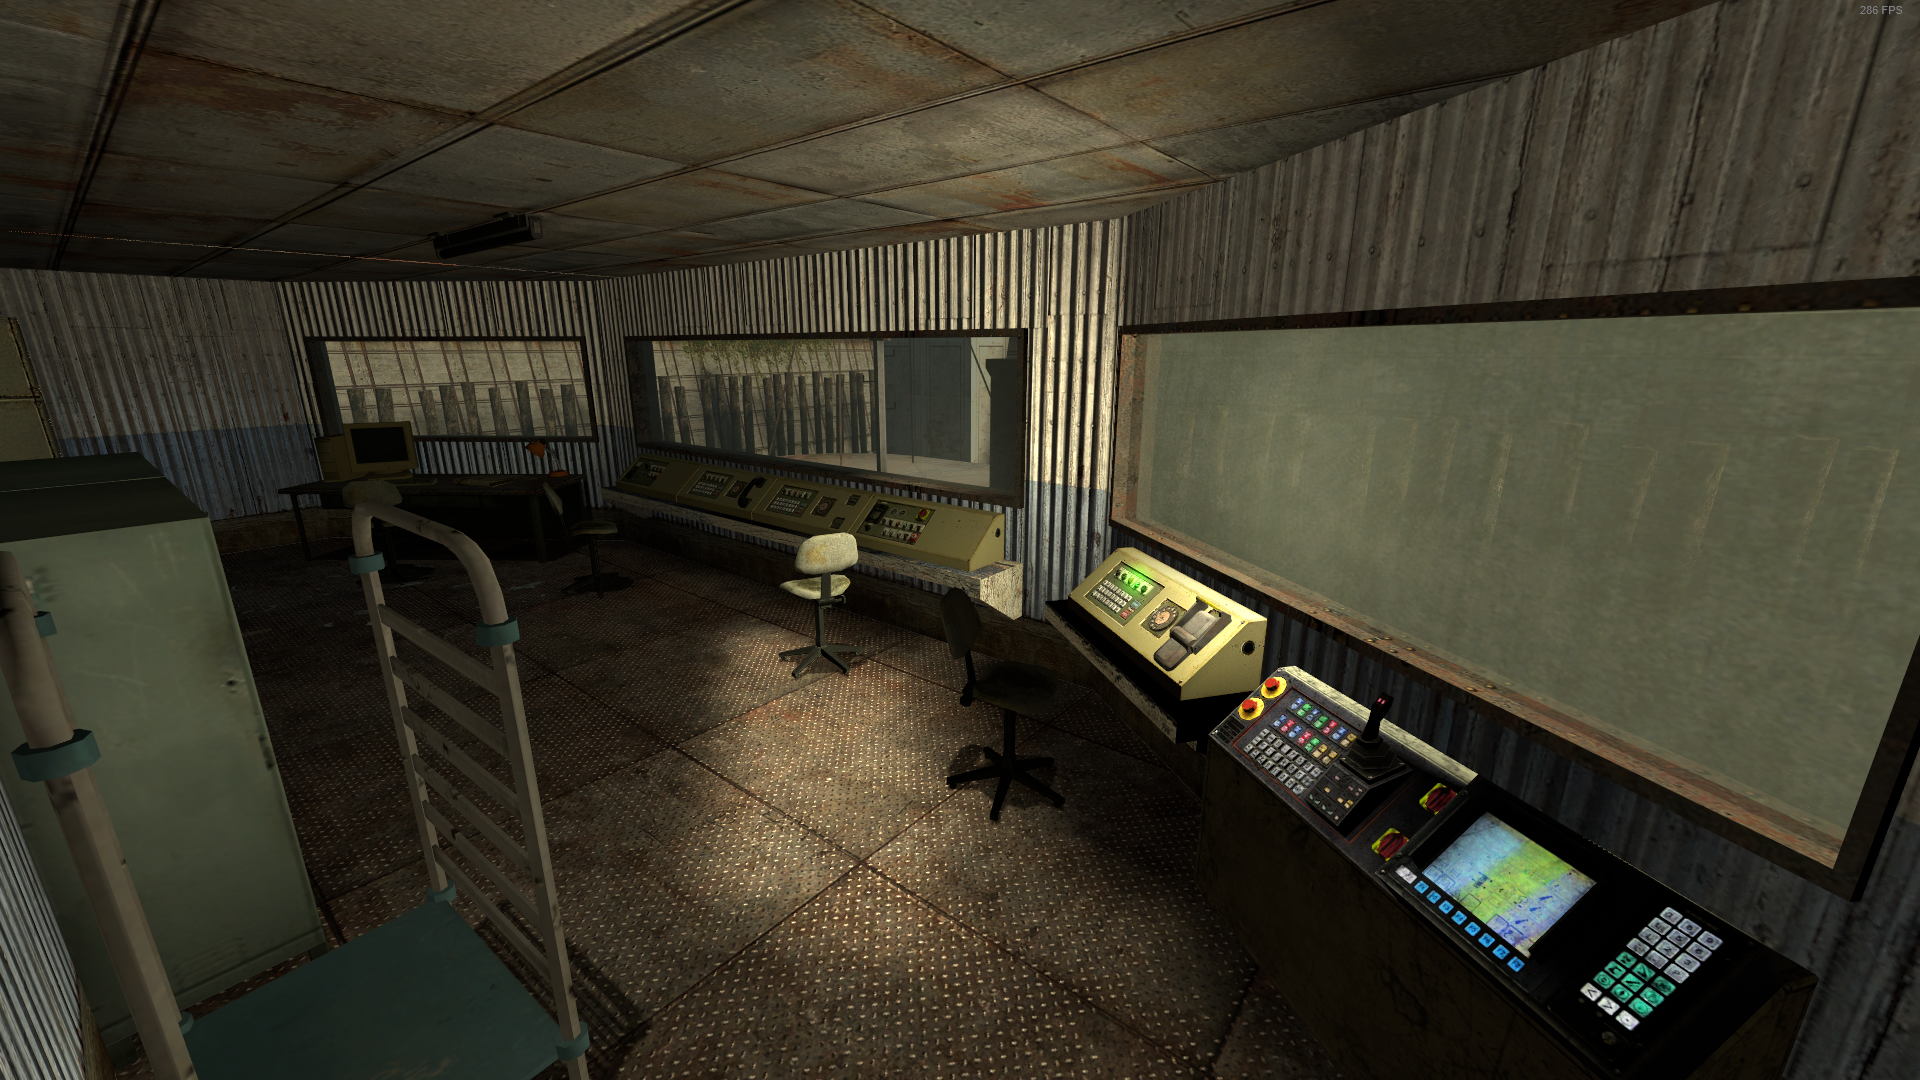 Control room interior